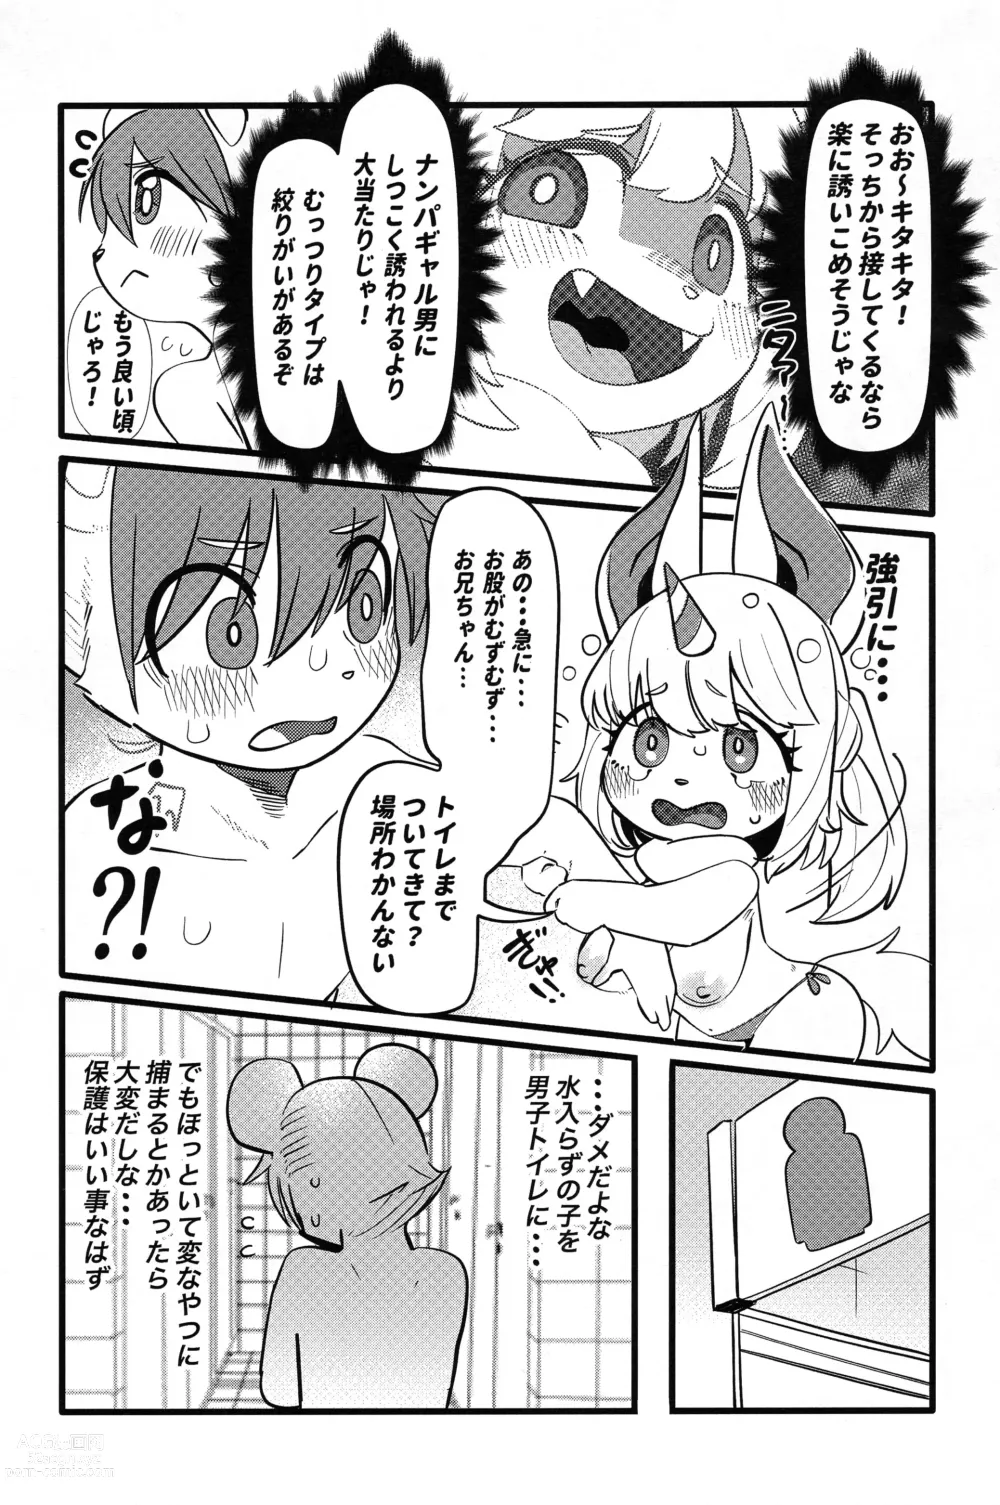 Page 21 of doujinshi Chiisakute Okkii